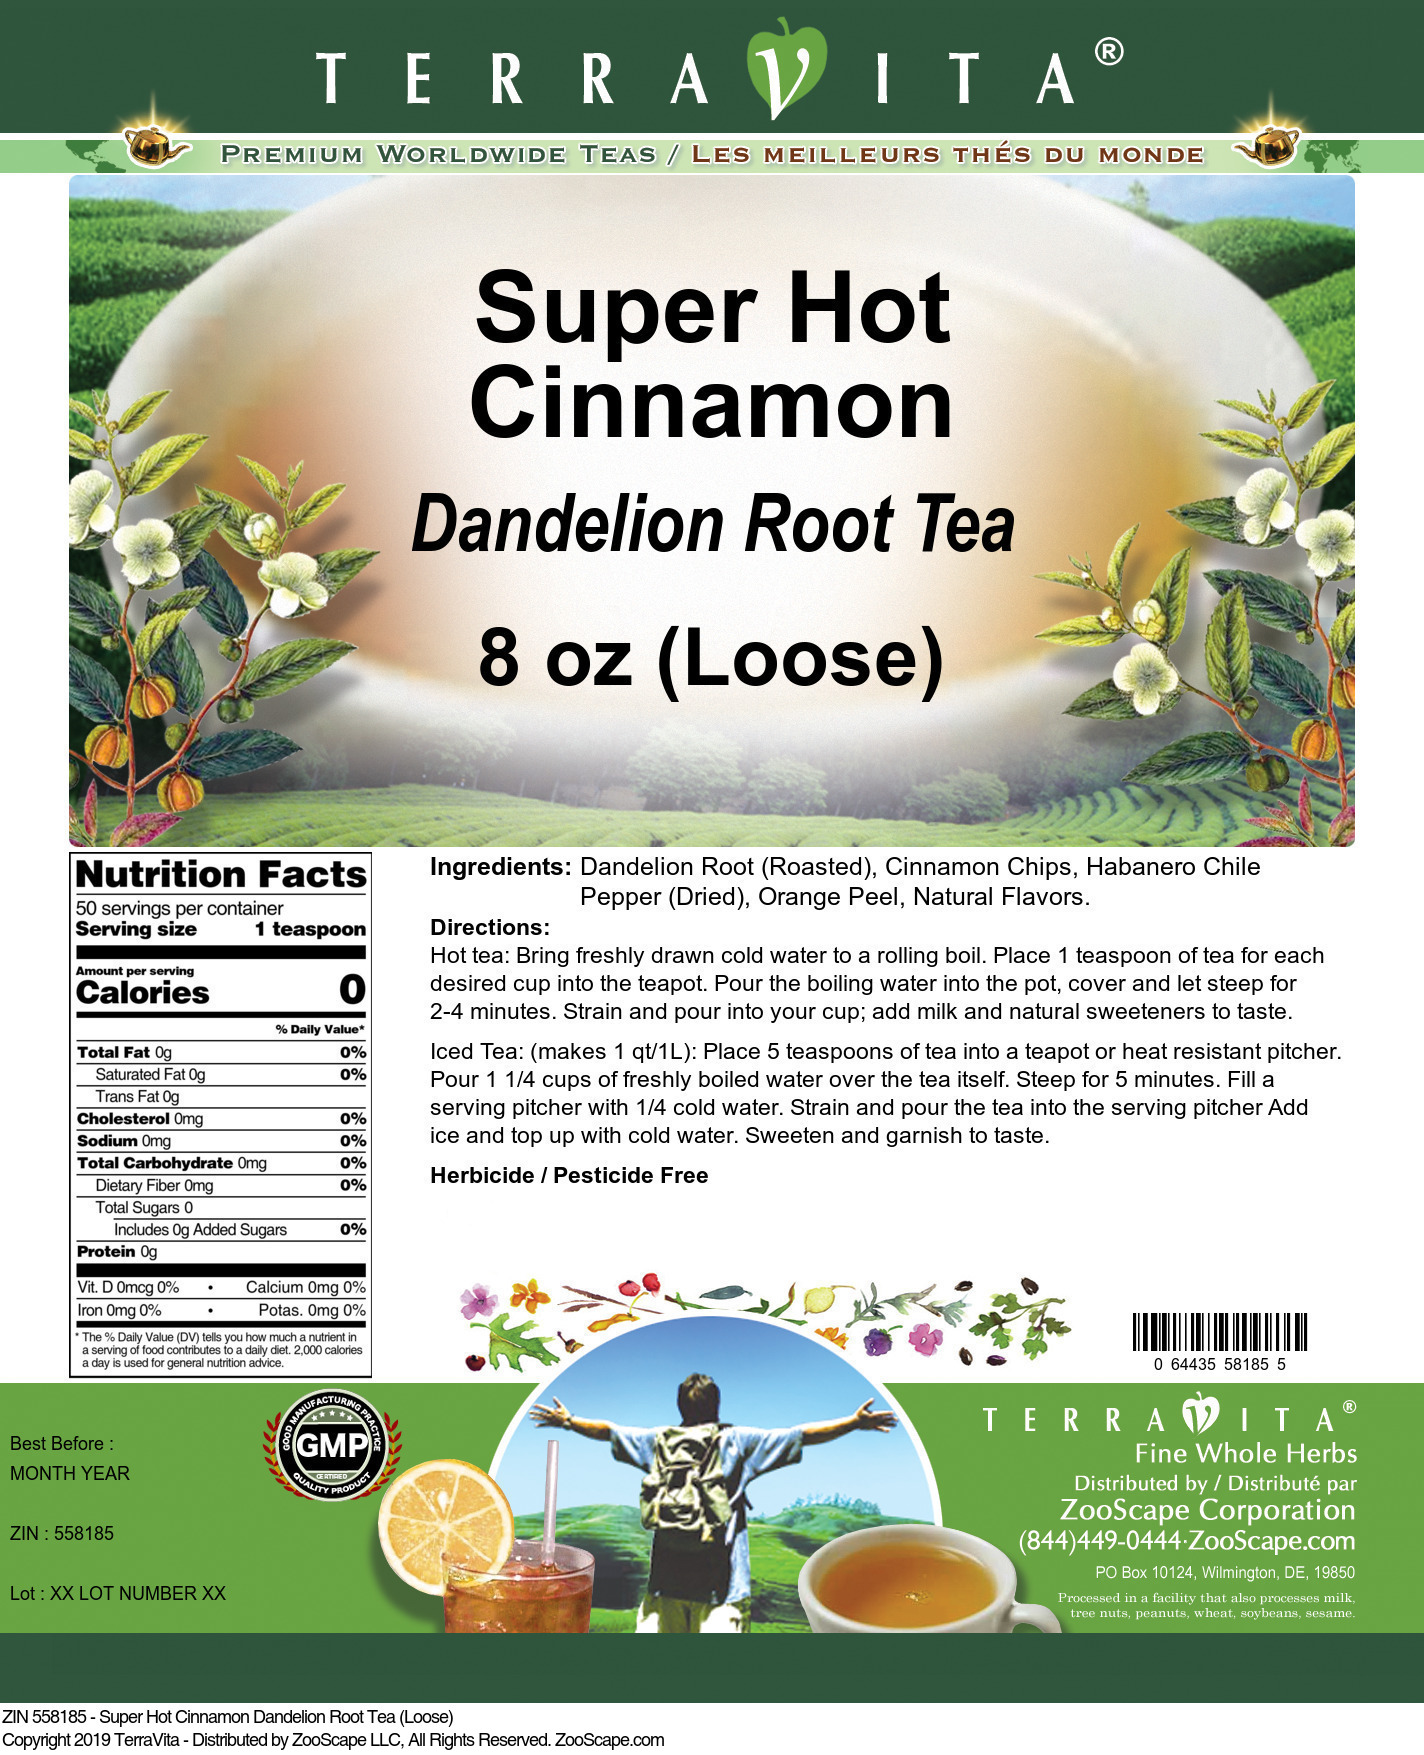 Super Hot Cinnamon Dandelion Root Tea (Loose) - Label